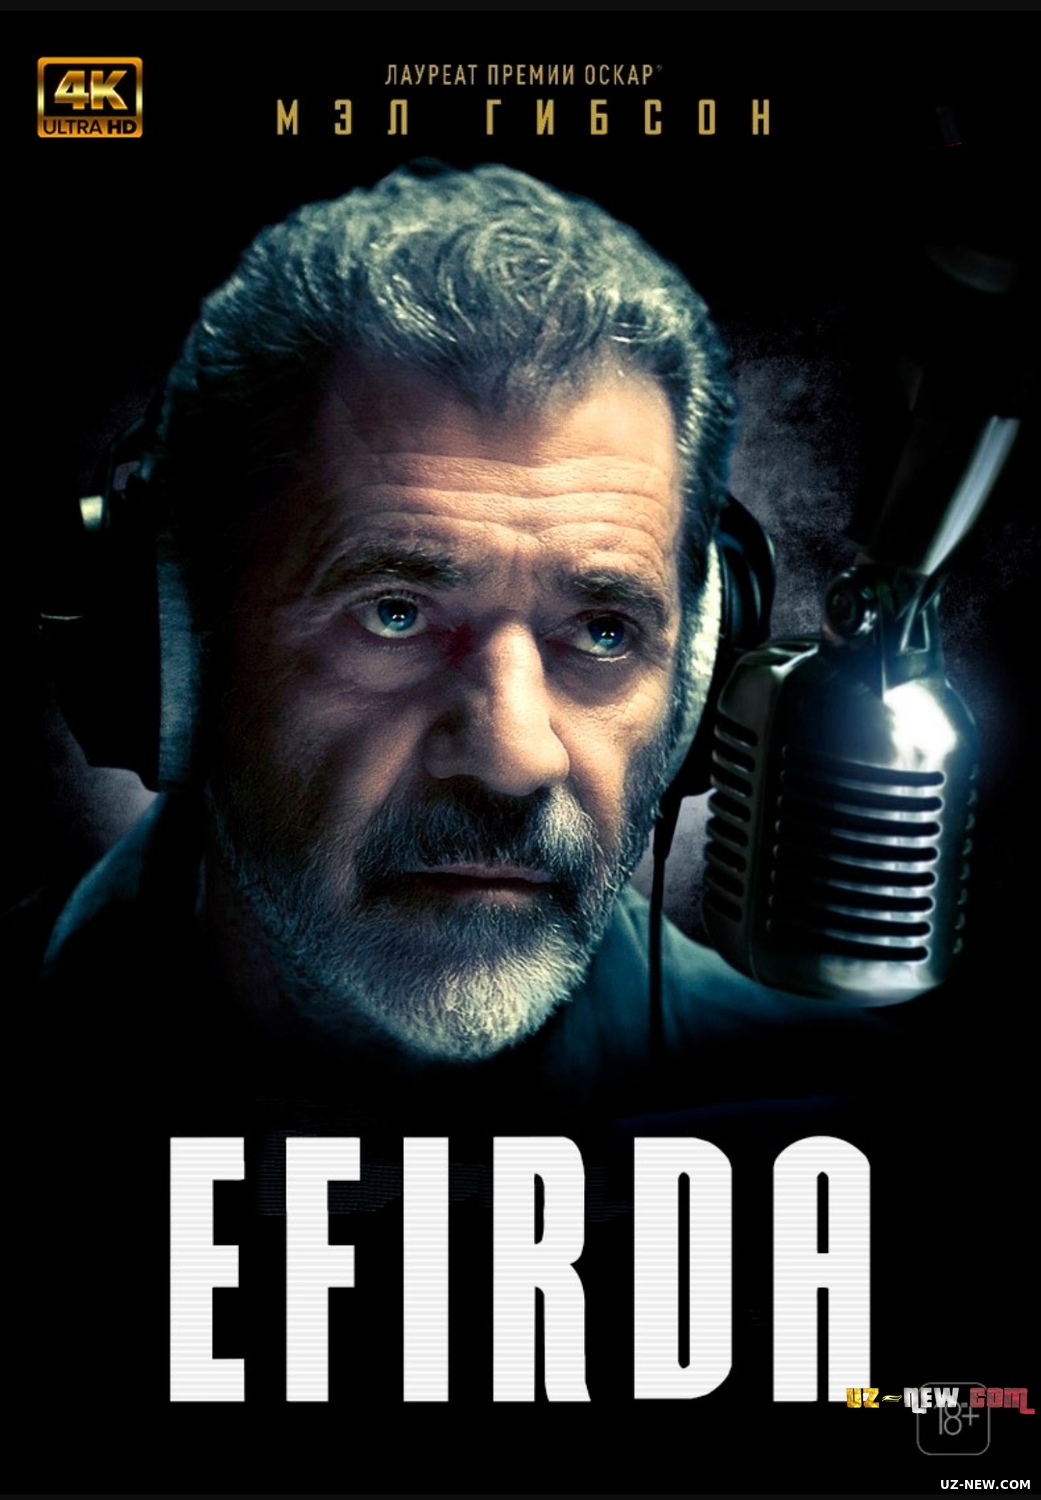 Efirda / Jonli efirda / В эфире (Mel Gibson ishtirokida Uzbek tilida)a 2022